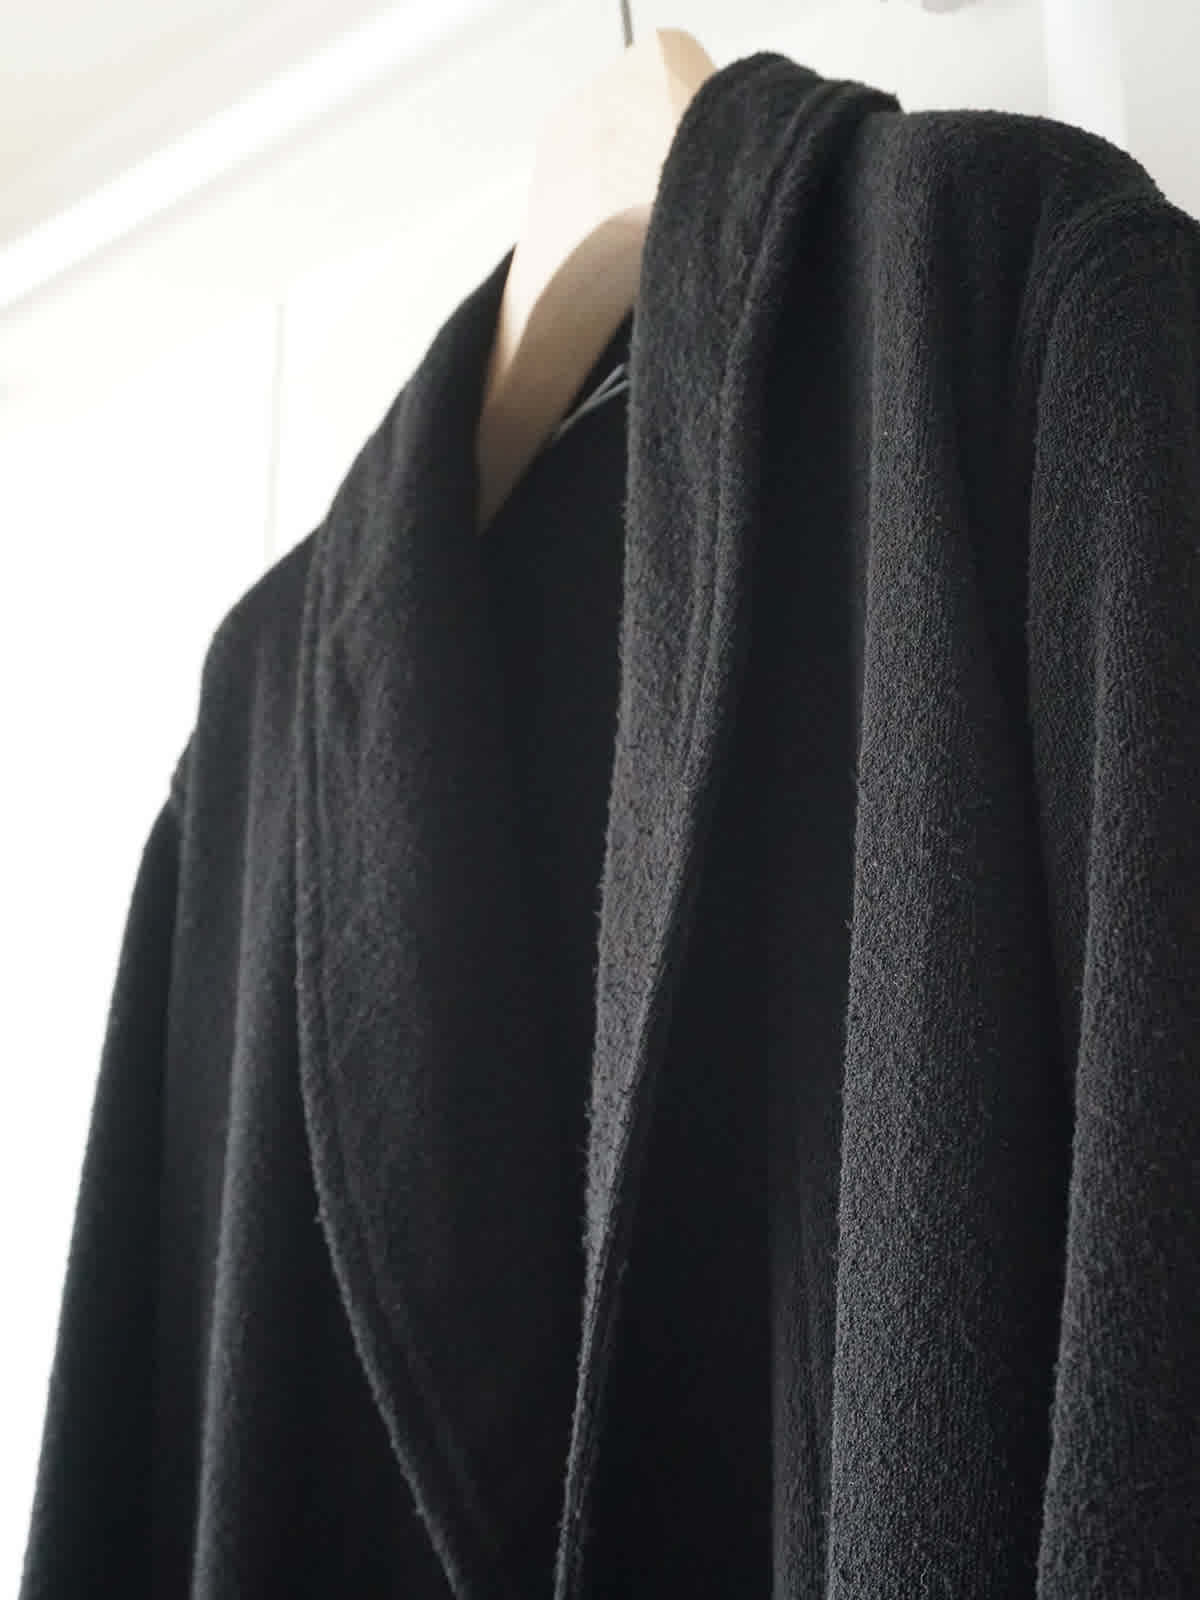 silk pile robe coat x4